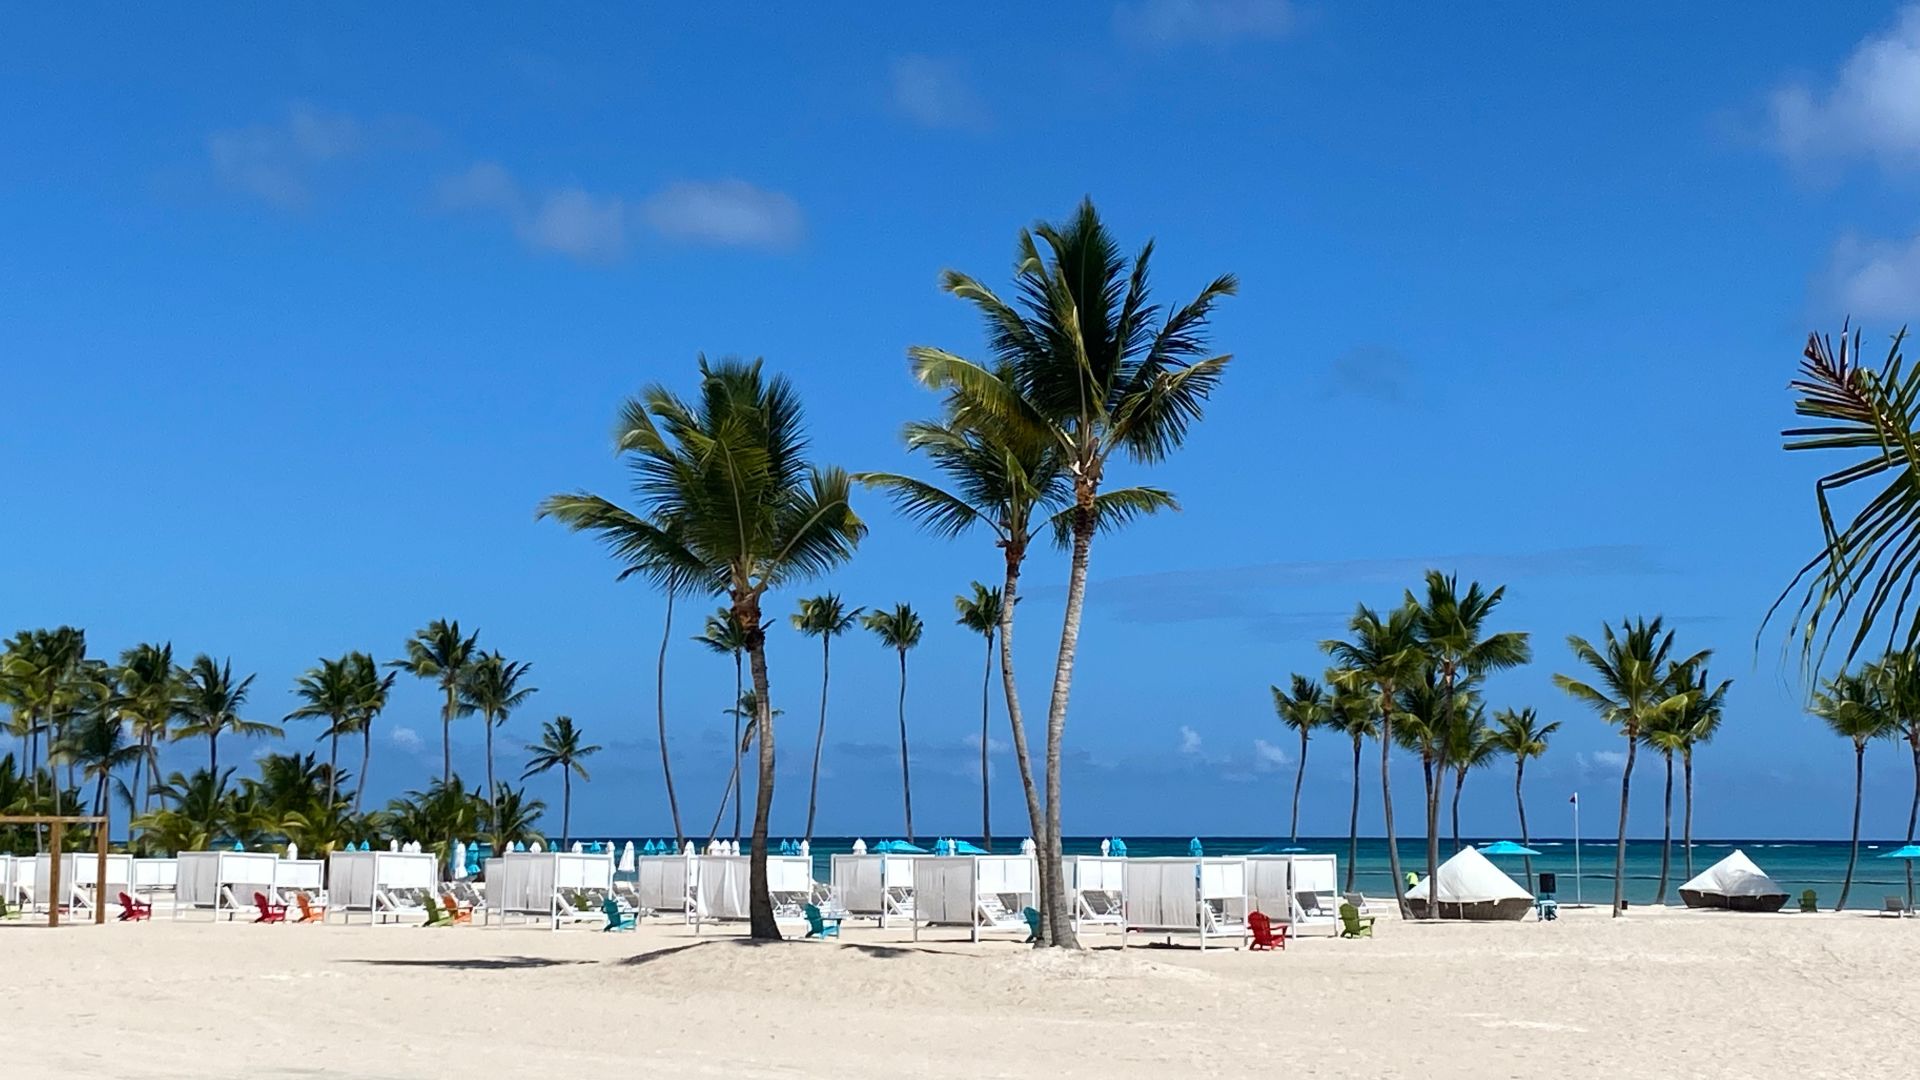 A Group Of Palm Trees On A Sandy Beach